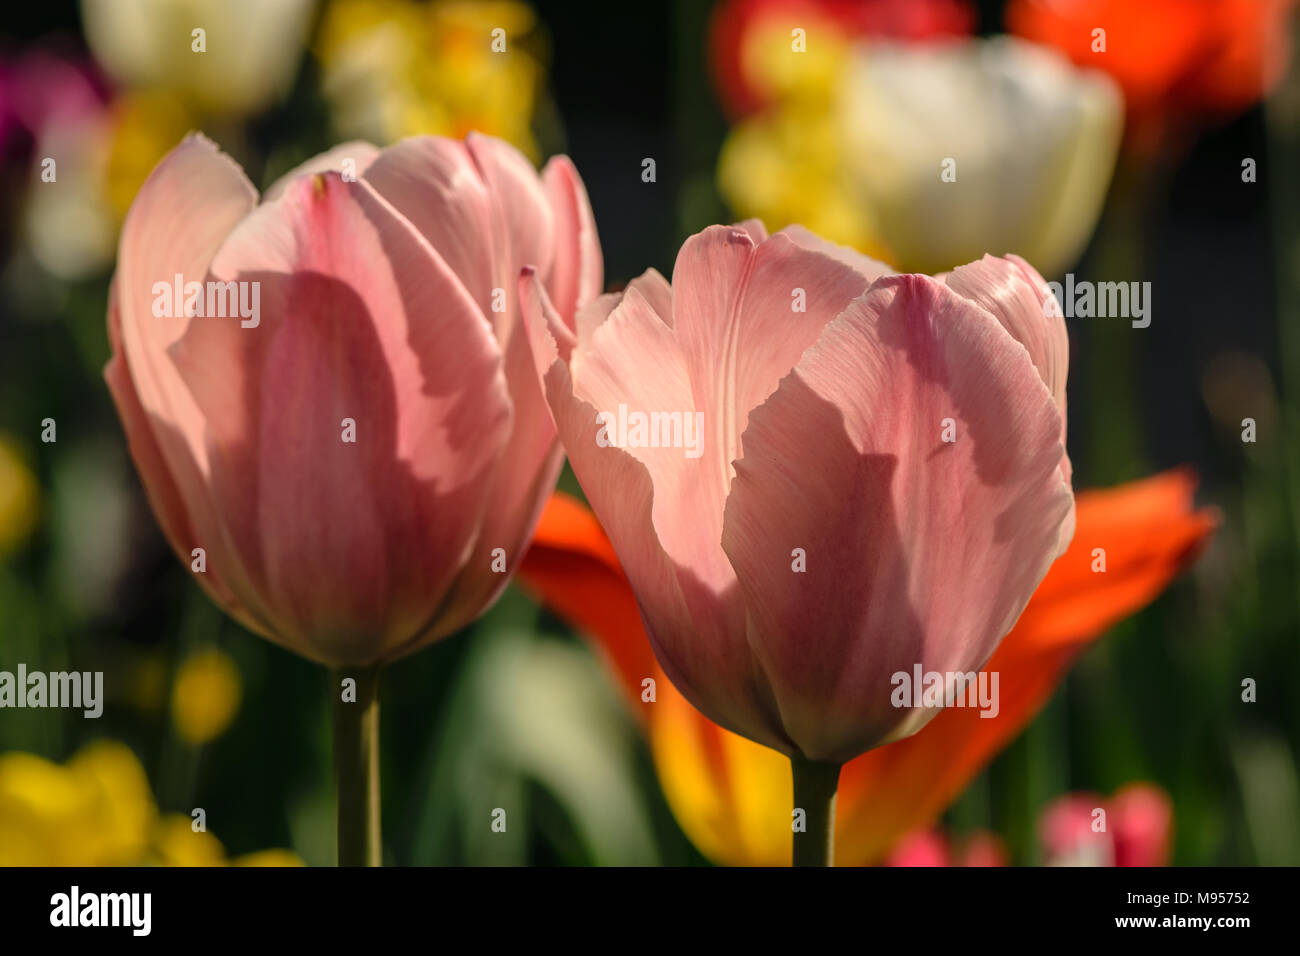 Rosa pallido Dawin tulipani ibrido tra mised tulip border Foto Stock